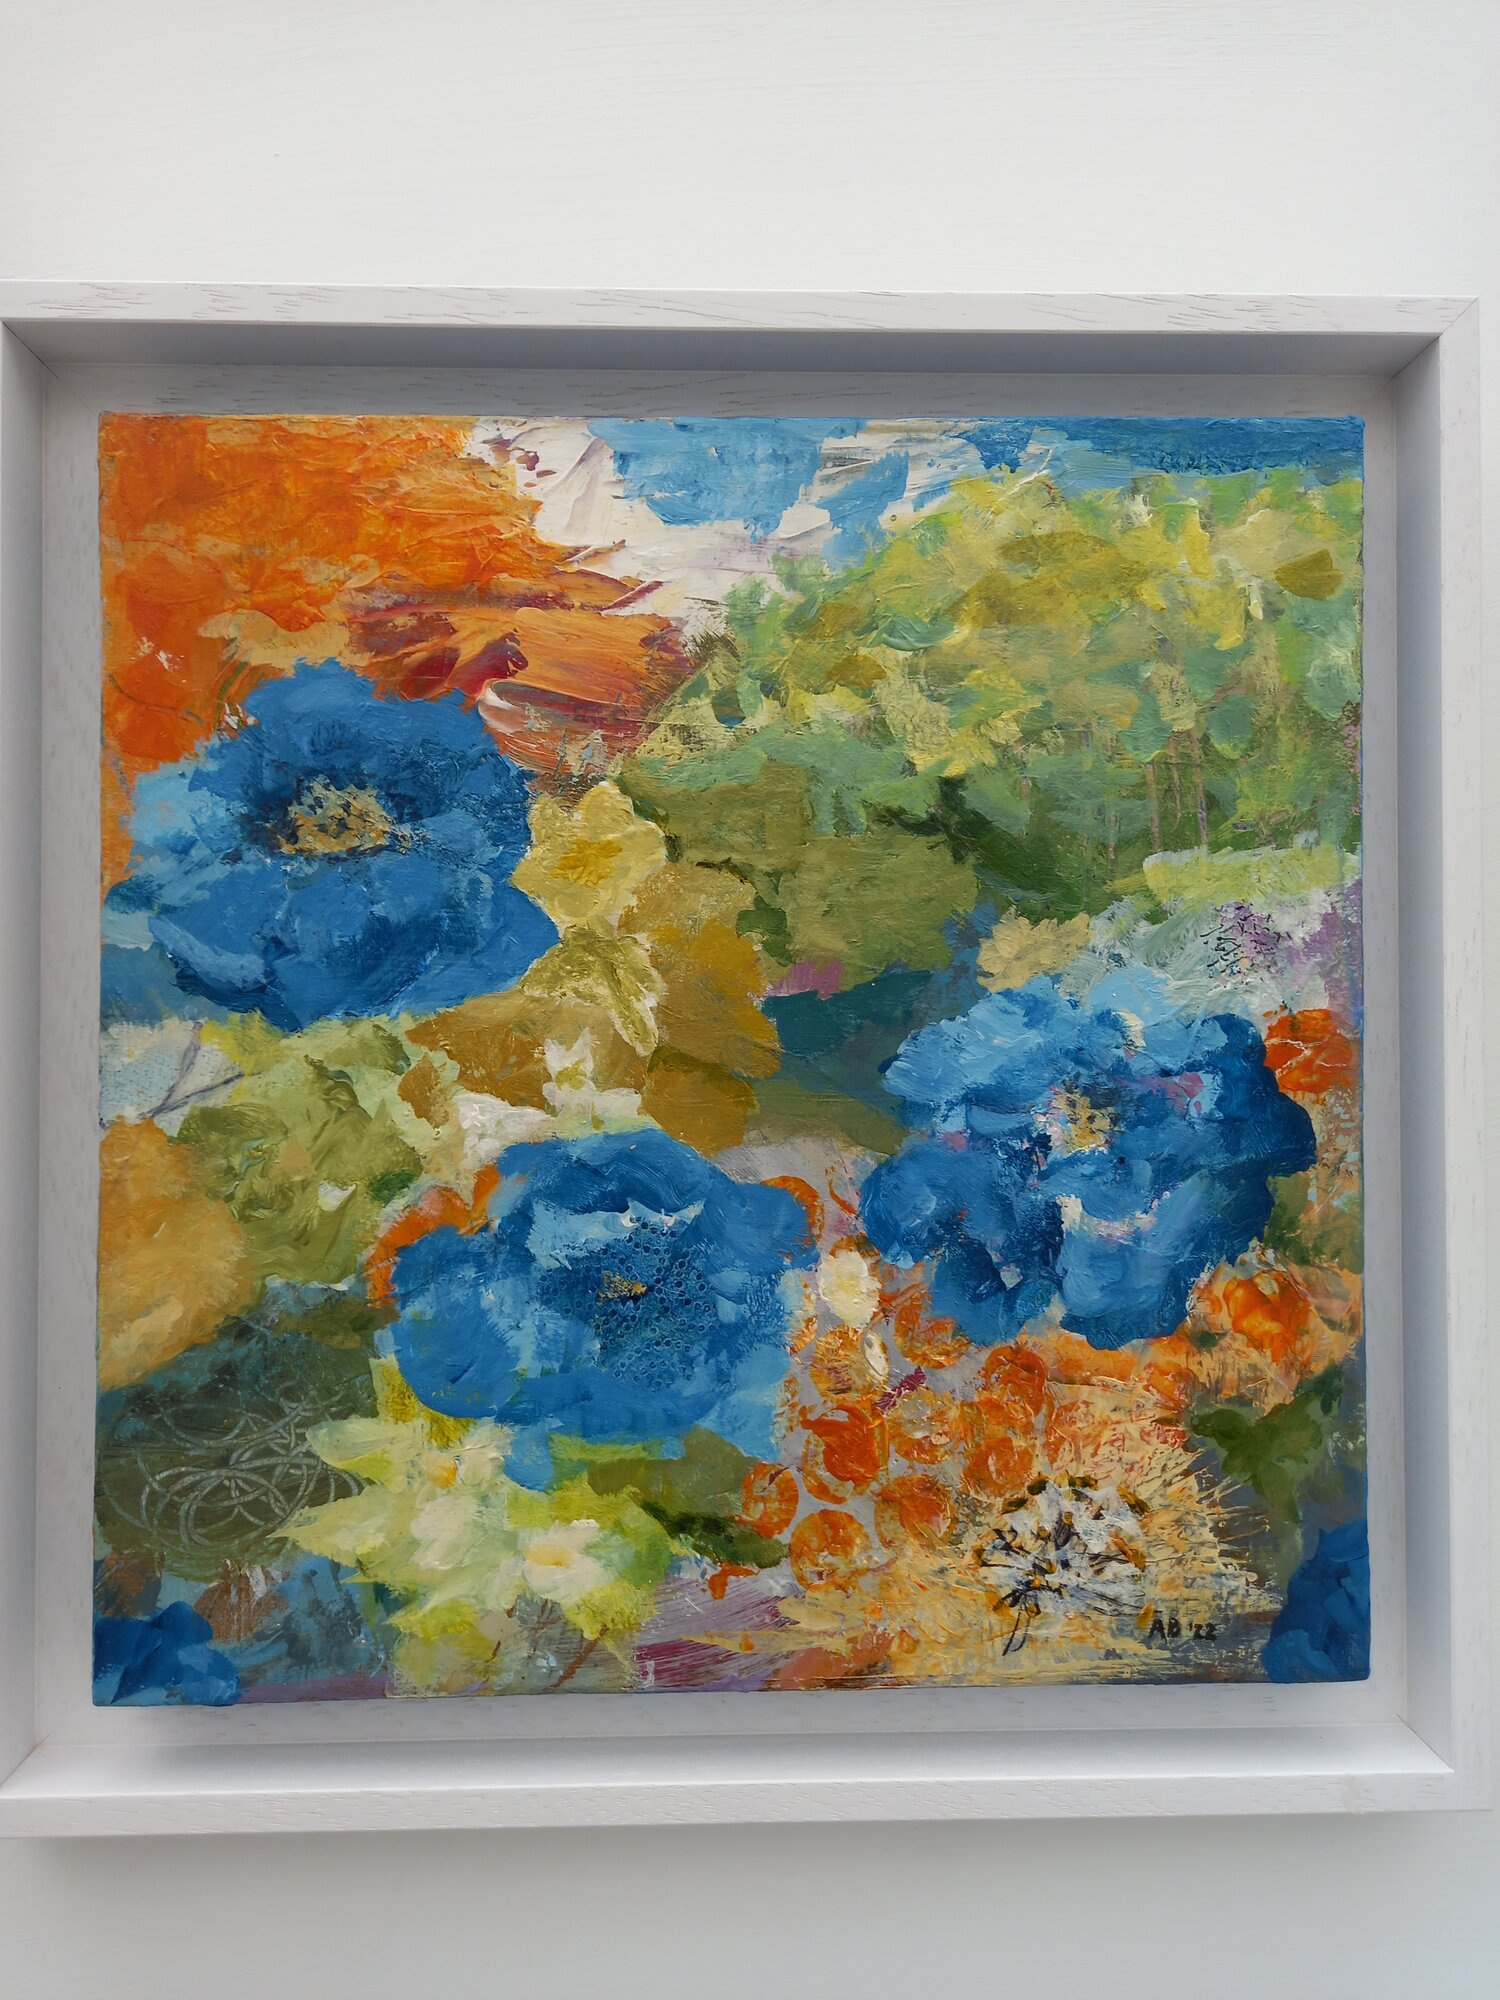 'Blue Flowers' by Ann Barnes